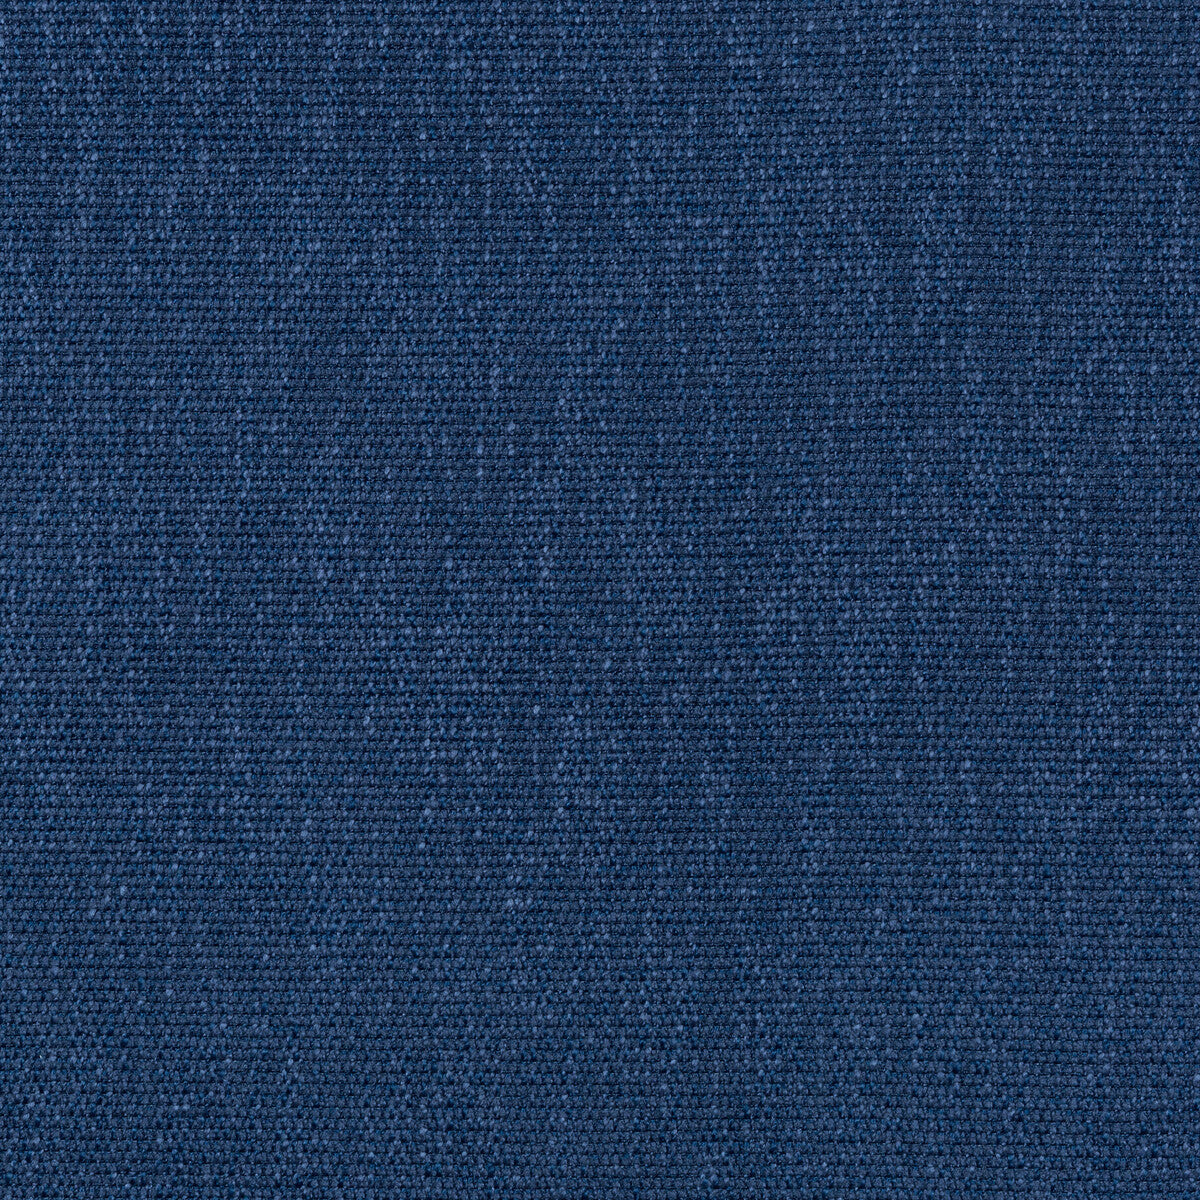 Kravet Smart fabric in 35943-55 color - pattern 35943.55.0 - by Kravet Smart in the Performance Kravetarmor collection